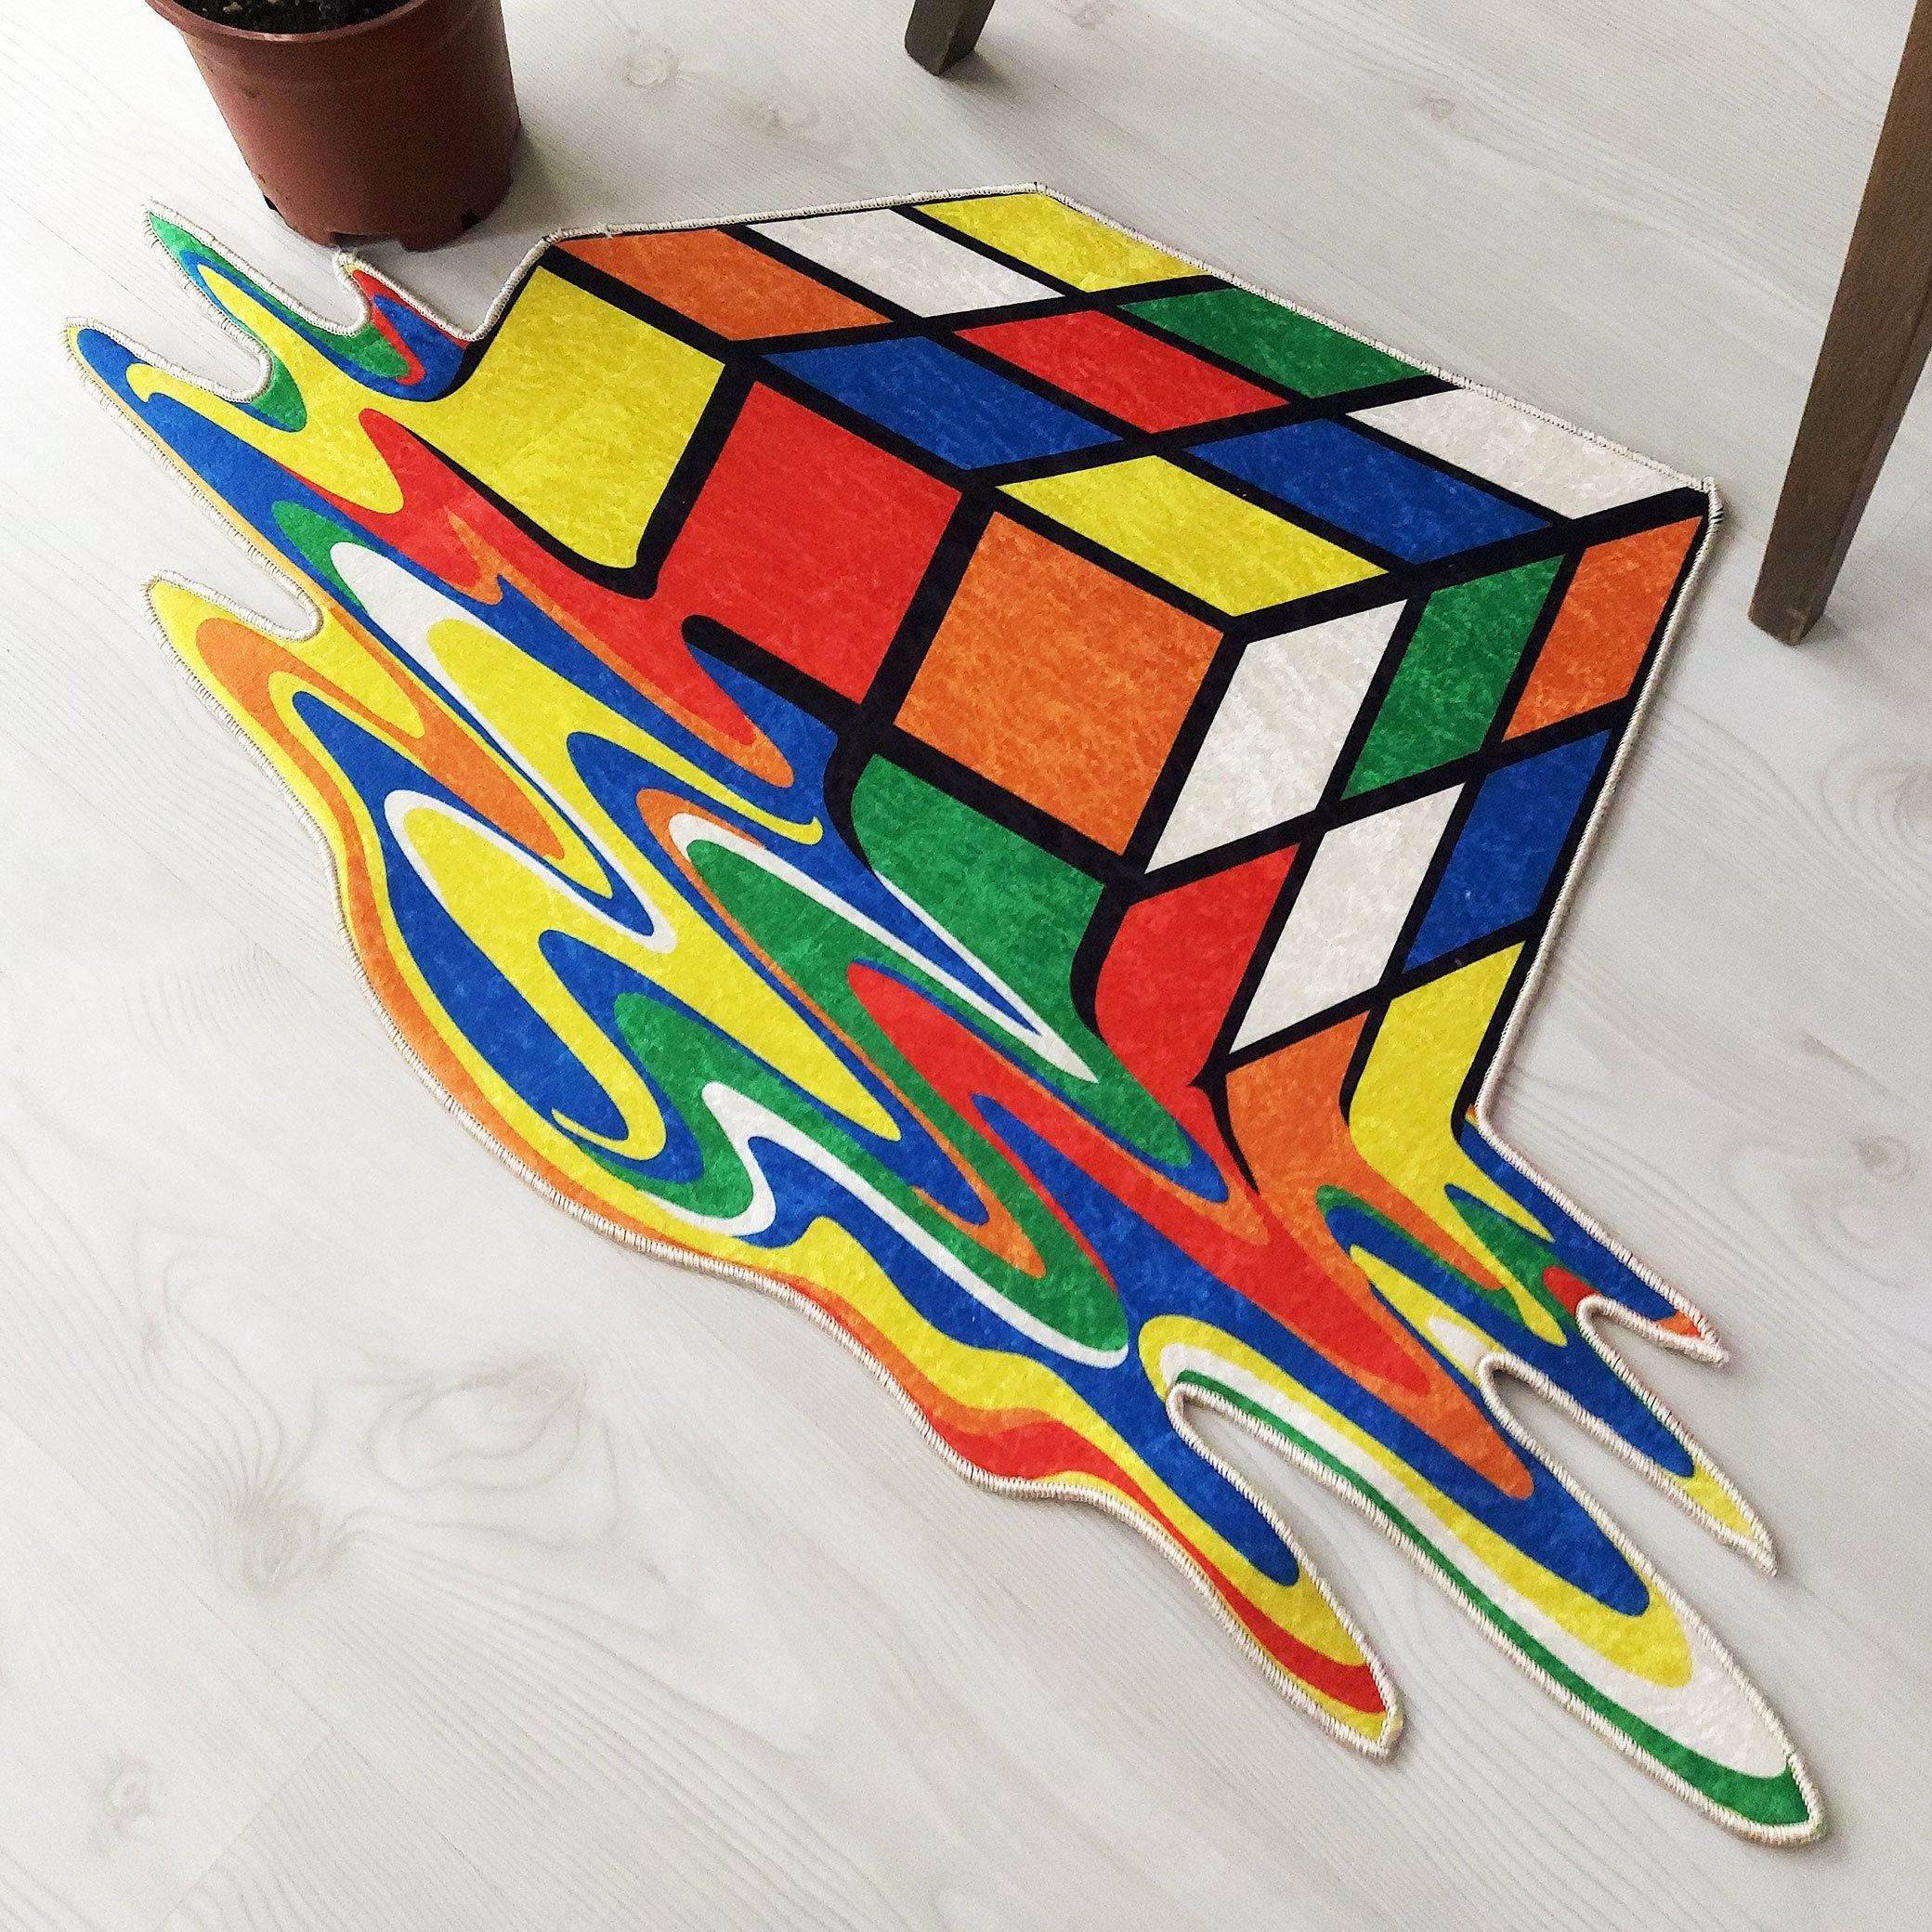 Melting Rubik's Cube Rug